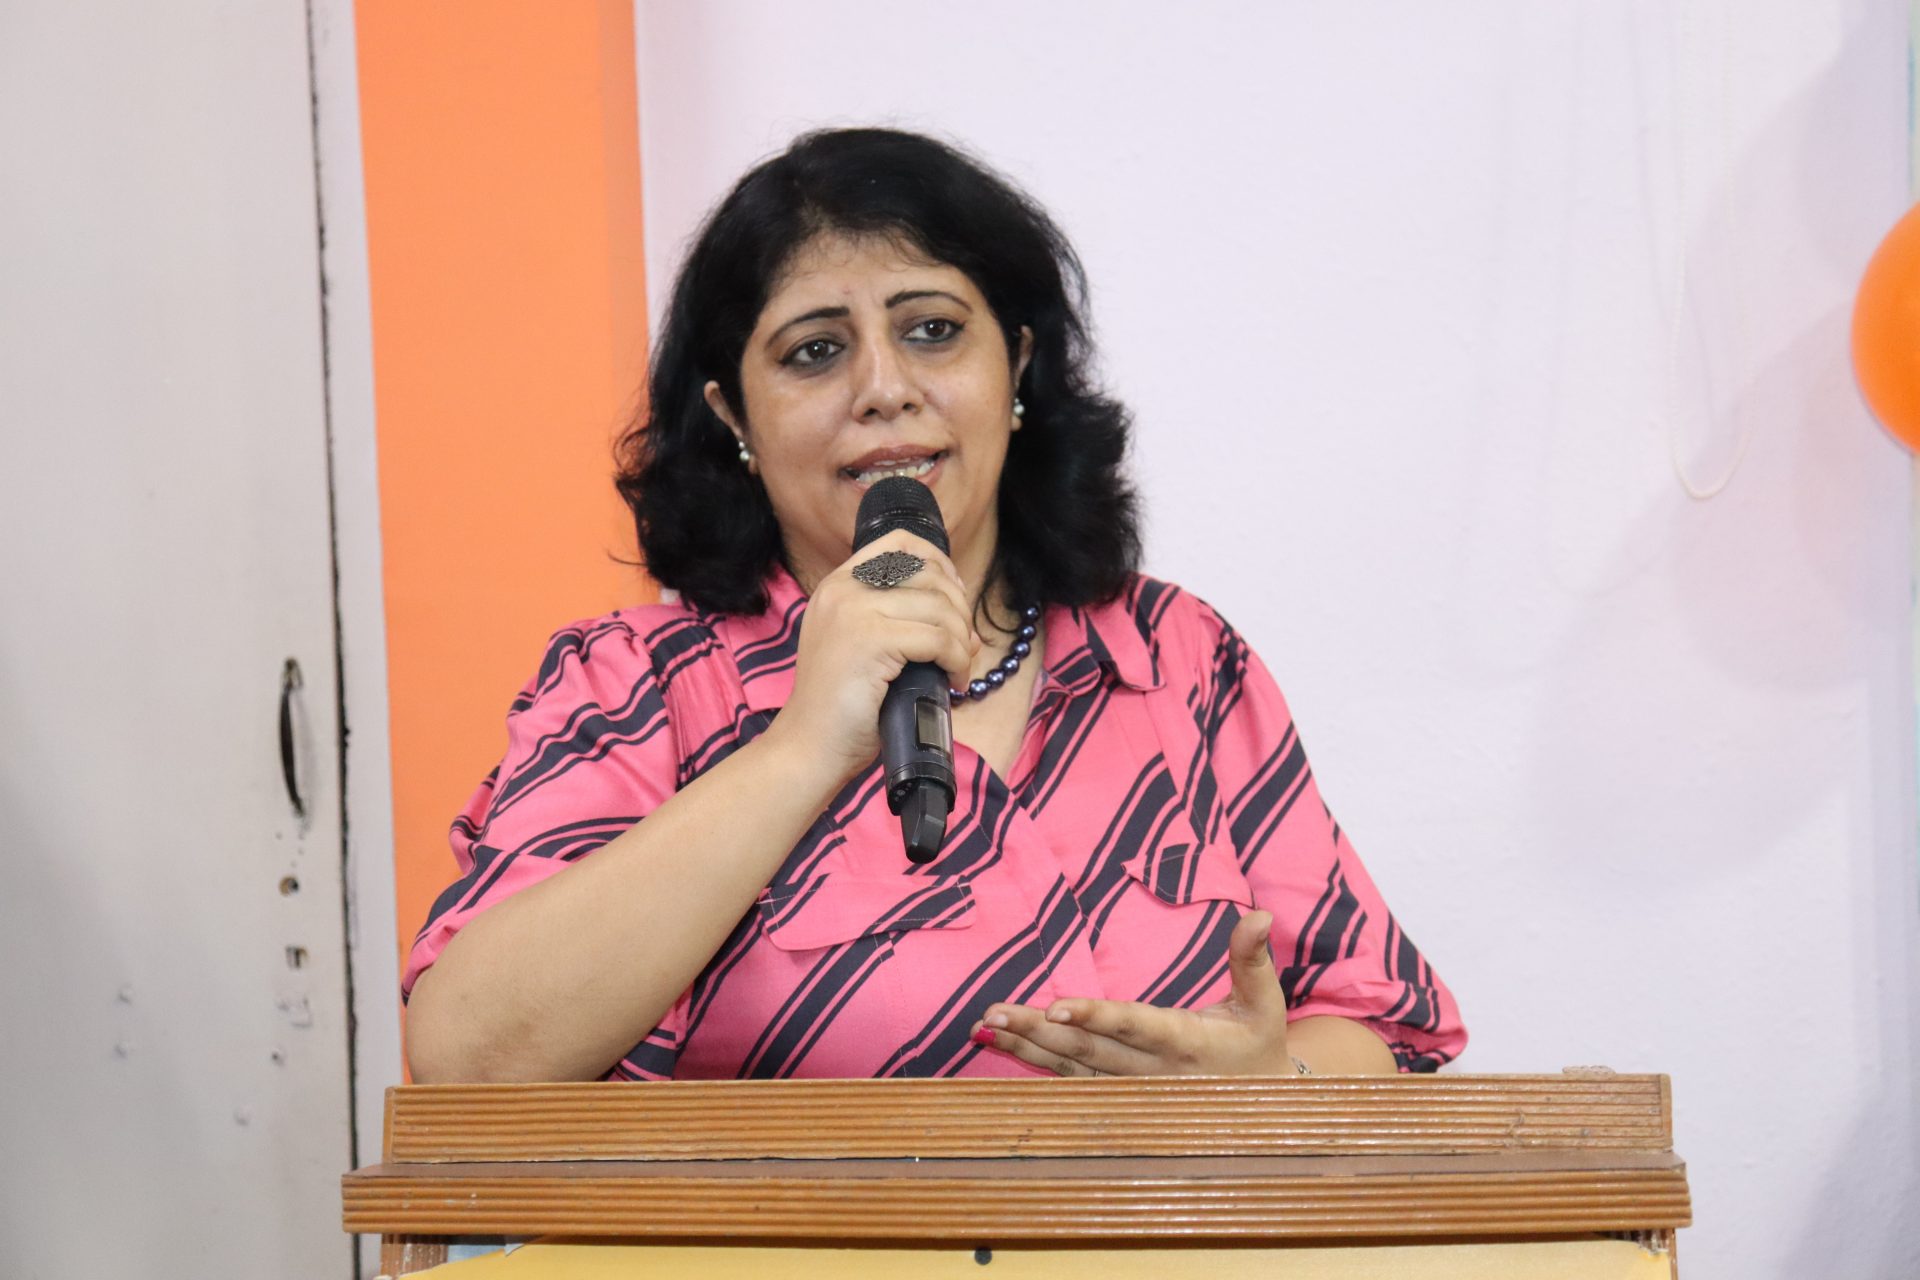 Eduverse speaker, Pooja Priyamvada